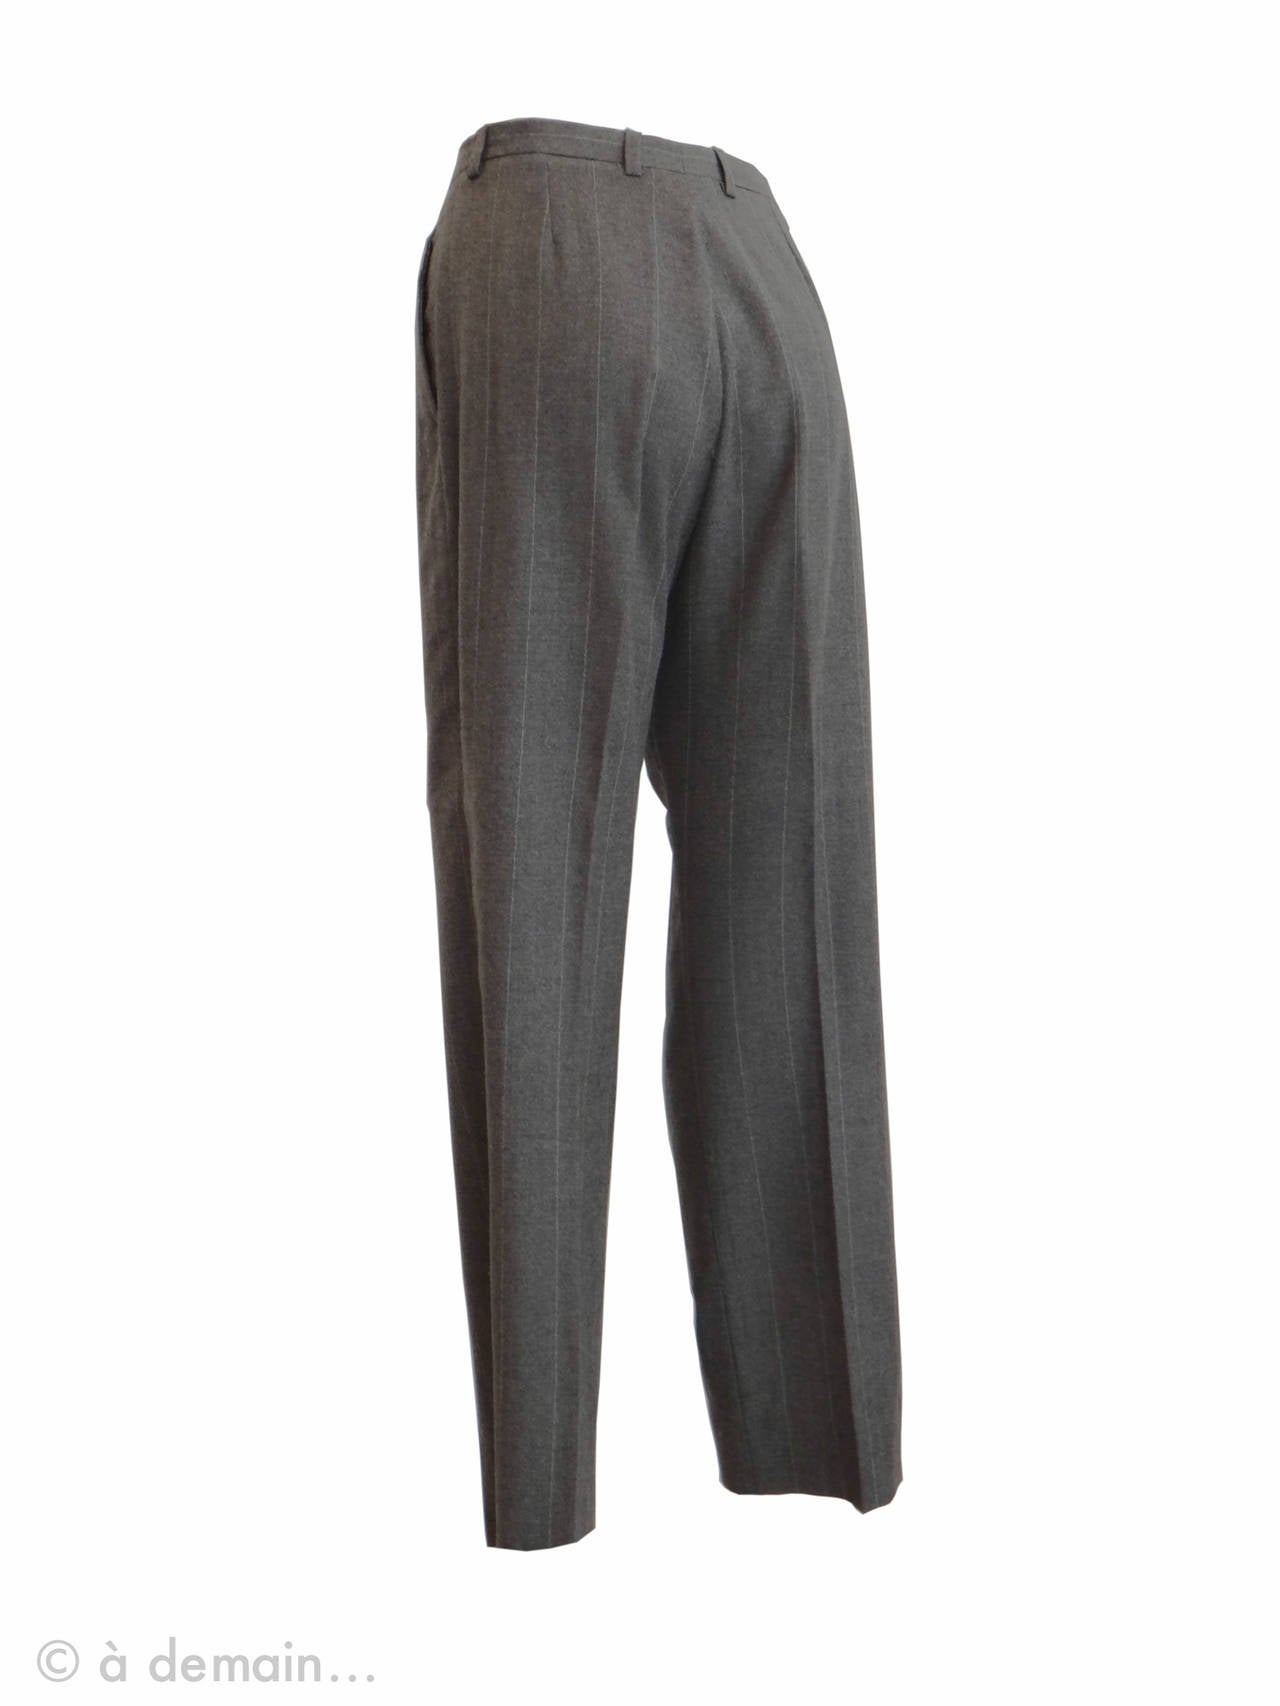 Striped Gray Trouser Suit by Yves Saint Laurent Rive Gauche, size 36 For Sale 2